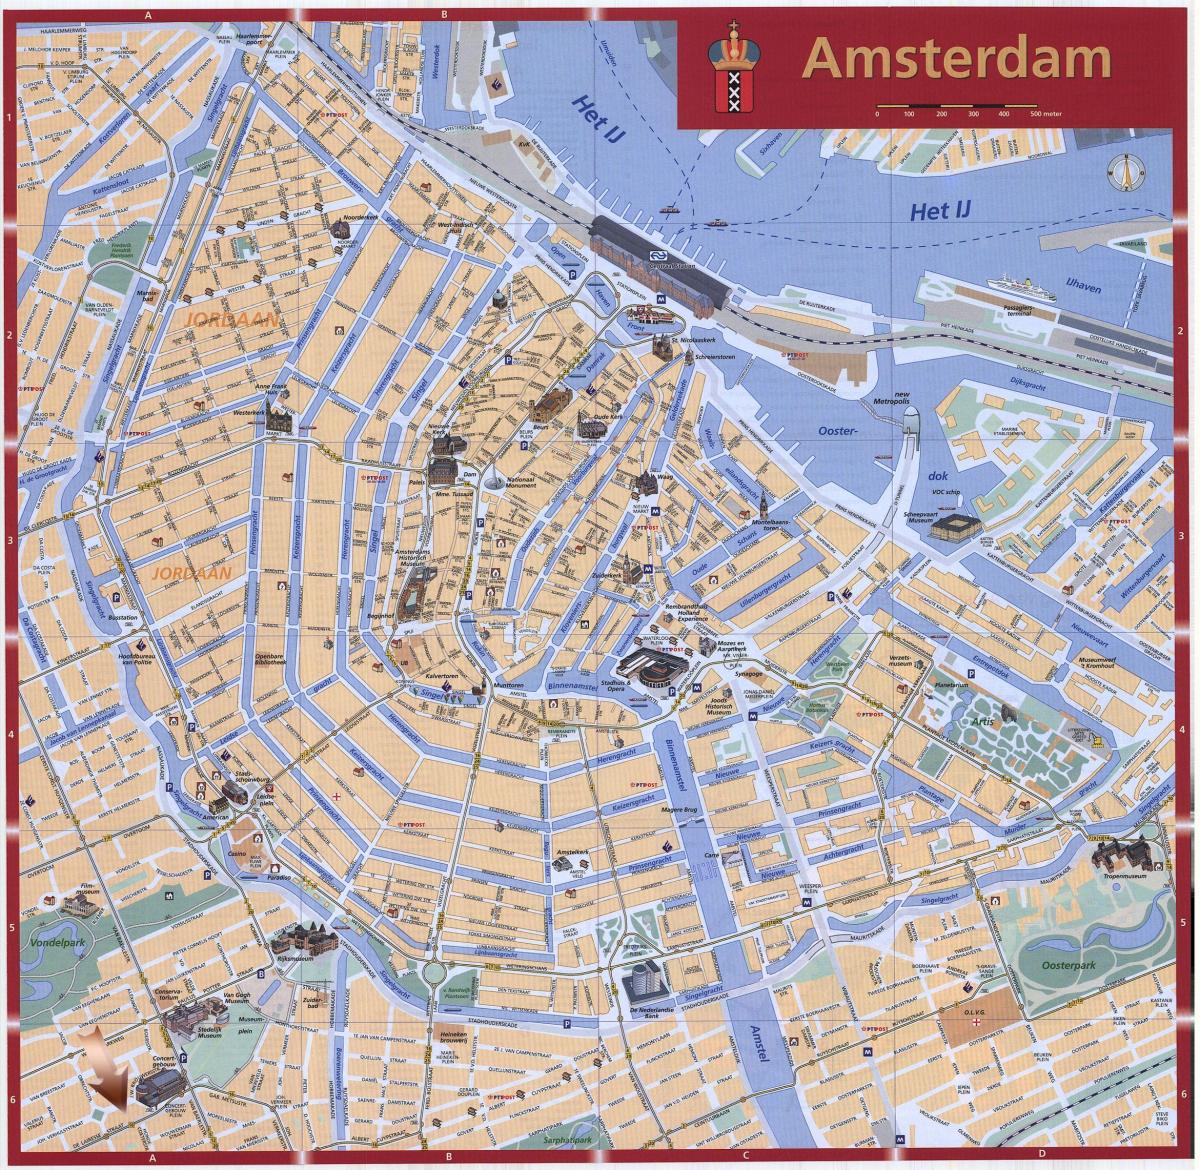 Ámsterdam, holanda mapa